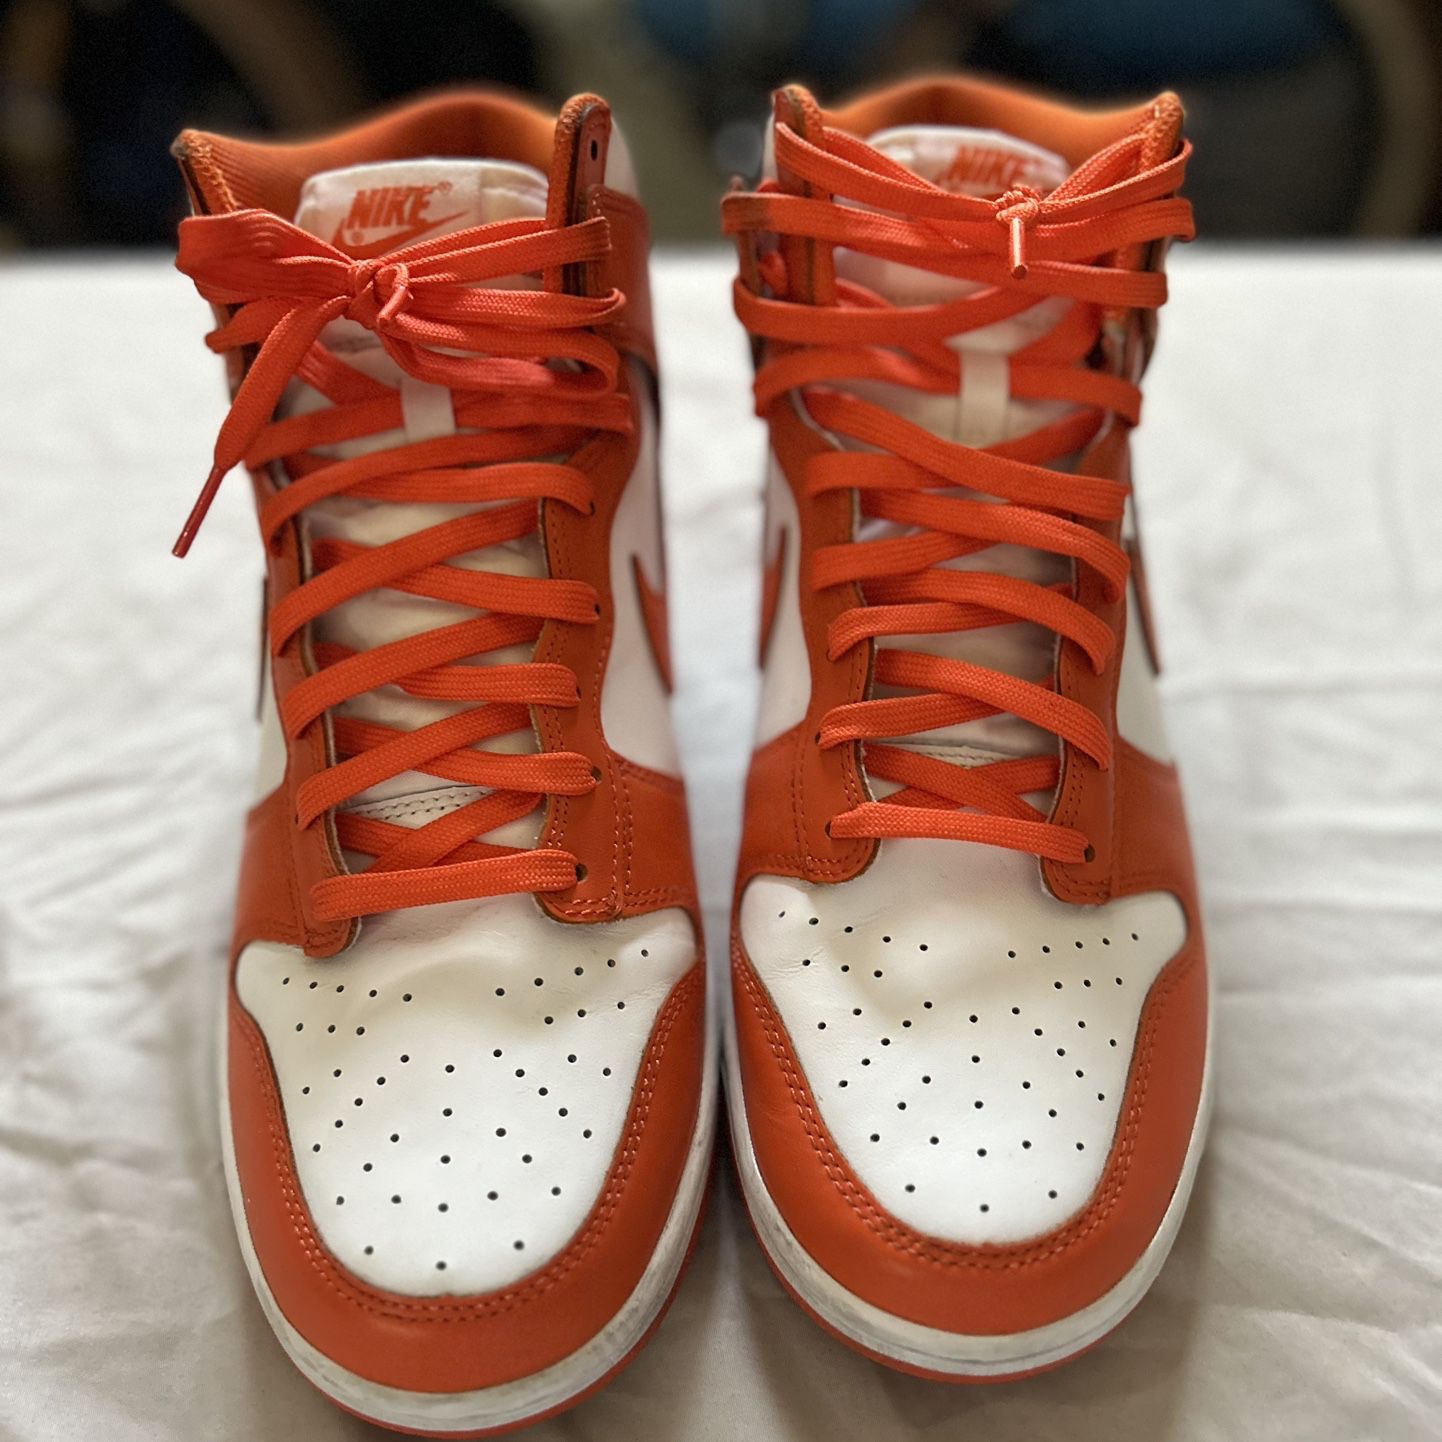 Nike Dunk High Syracuse (Orange)